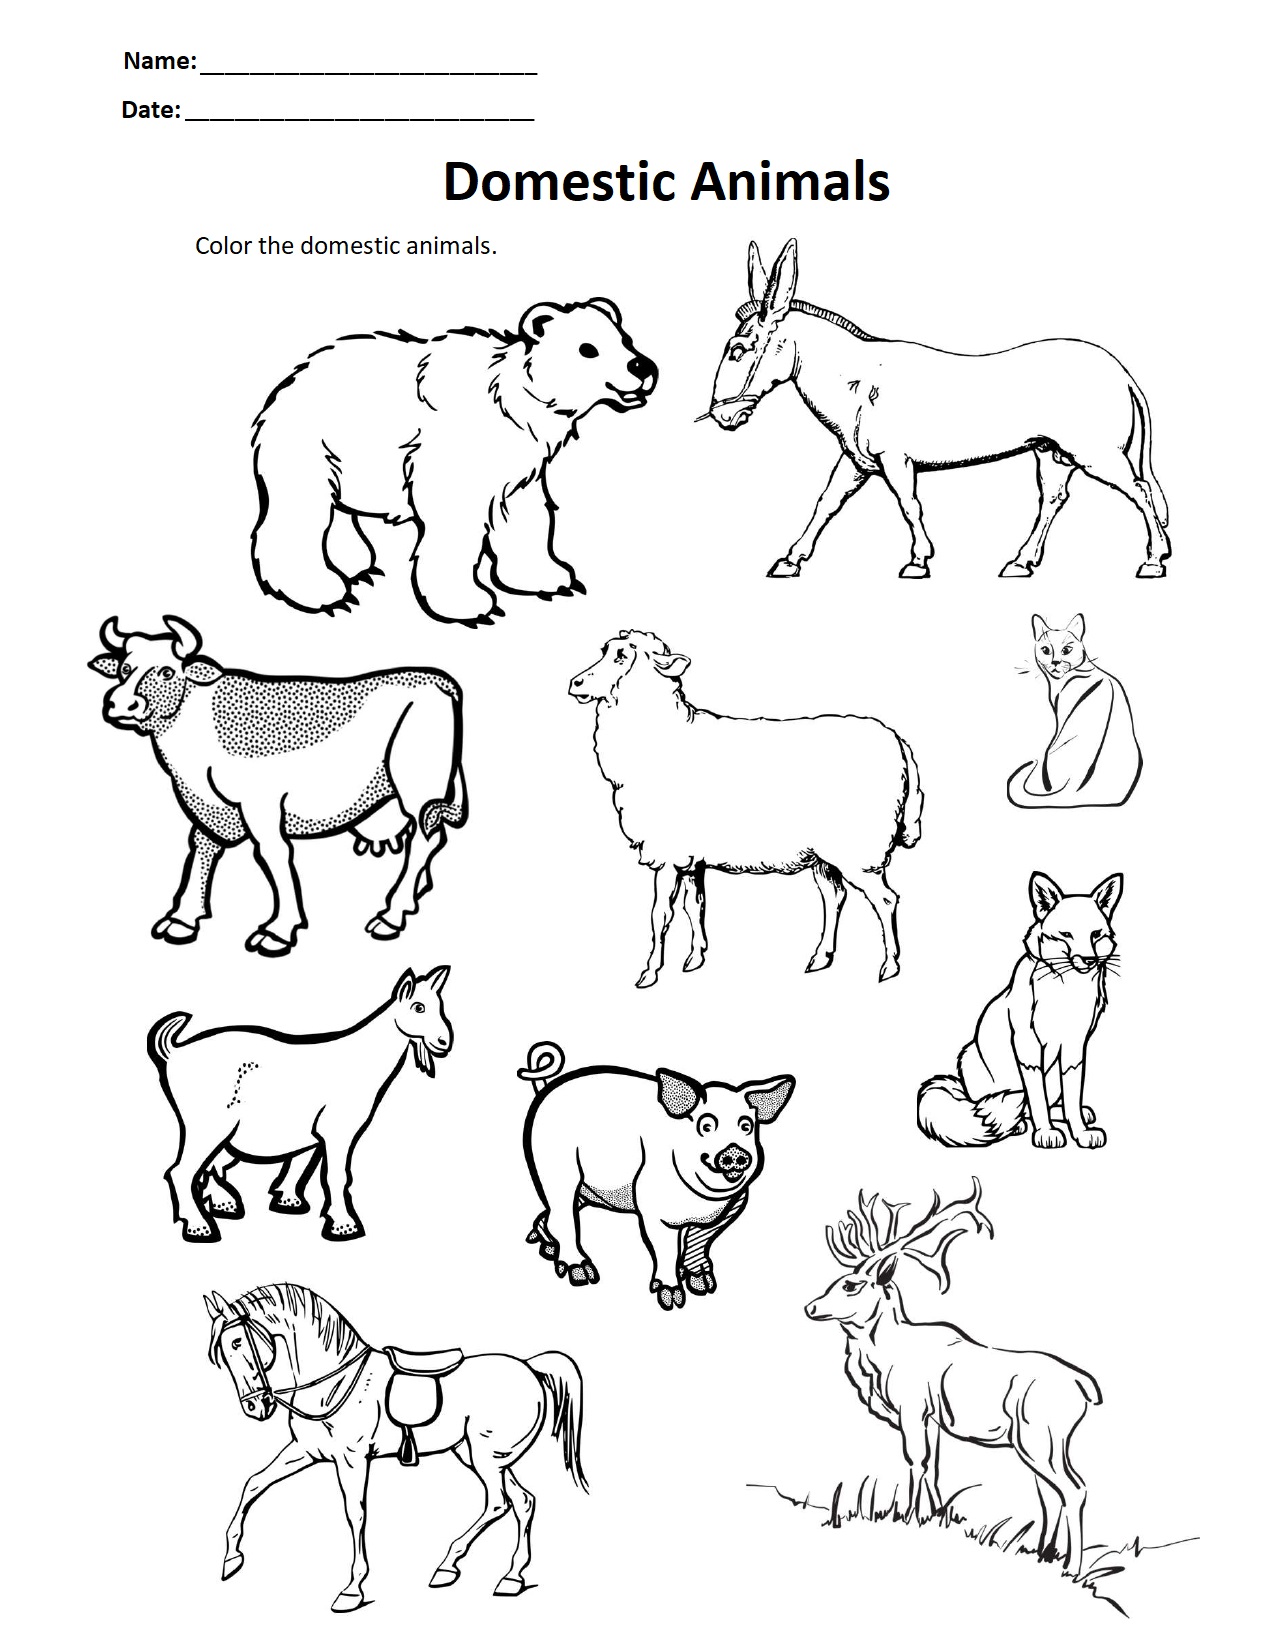 Domestic animals 1.jpg